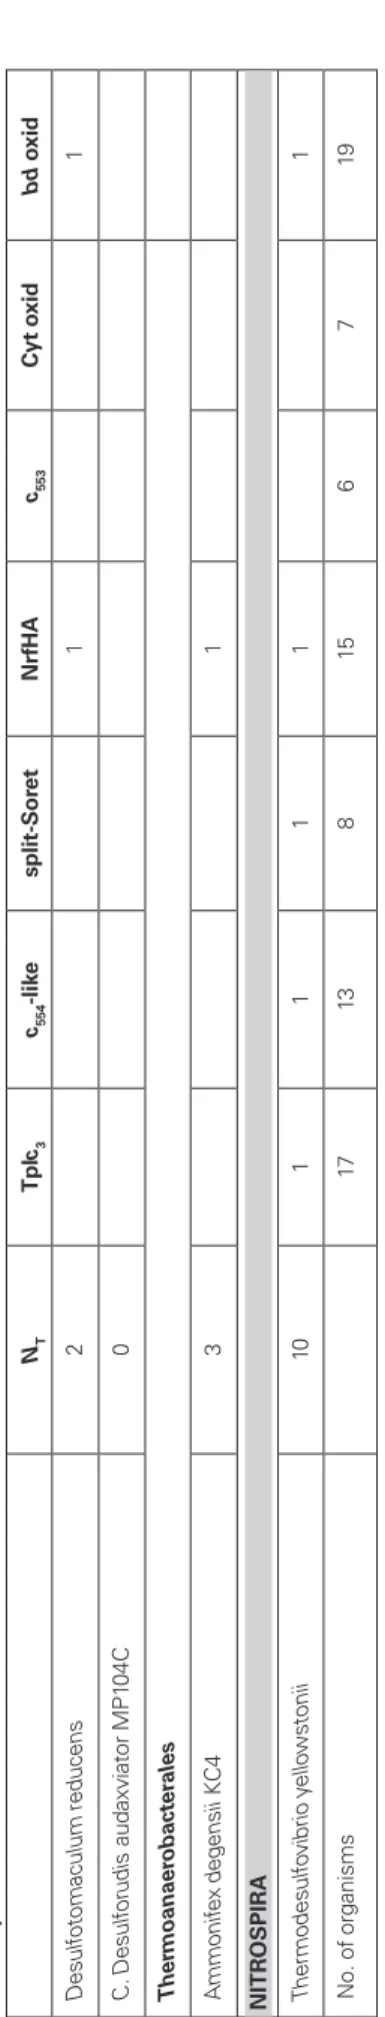 Table A3 | Analysis of nfnAB gene distribution in the SRO genomes. nfnA  nfnB ARCHAEA Archaeoglobus fulgidus  Archaeoglobus profundus  Caldivirga maquilingensis  DELTAPROTEOBACTERiA Desulfovibrionacae Desulfovibrio aespoeensis  Desulfovibrio desulfuricans 